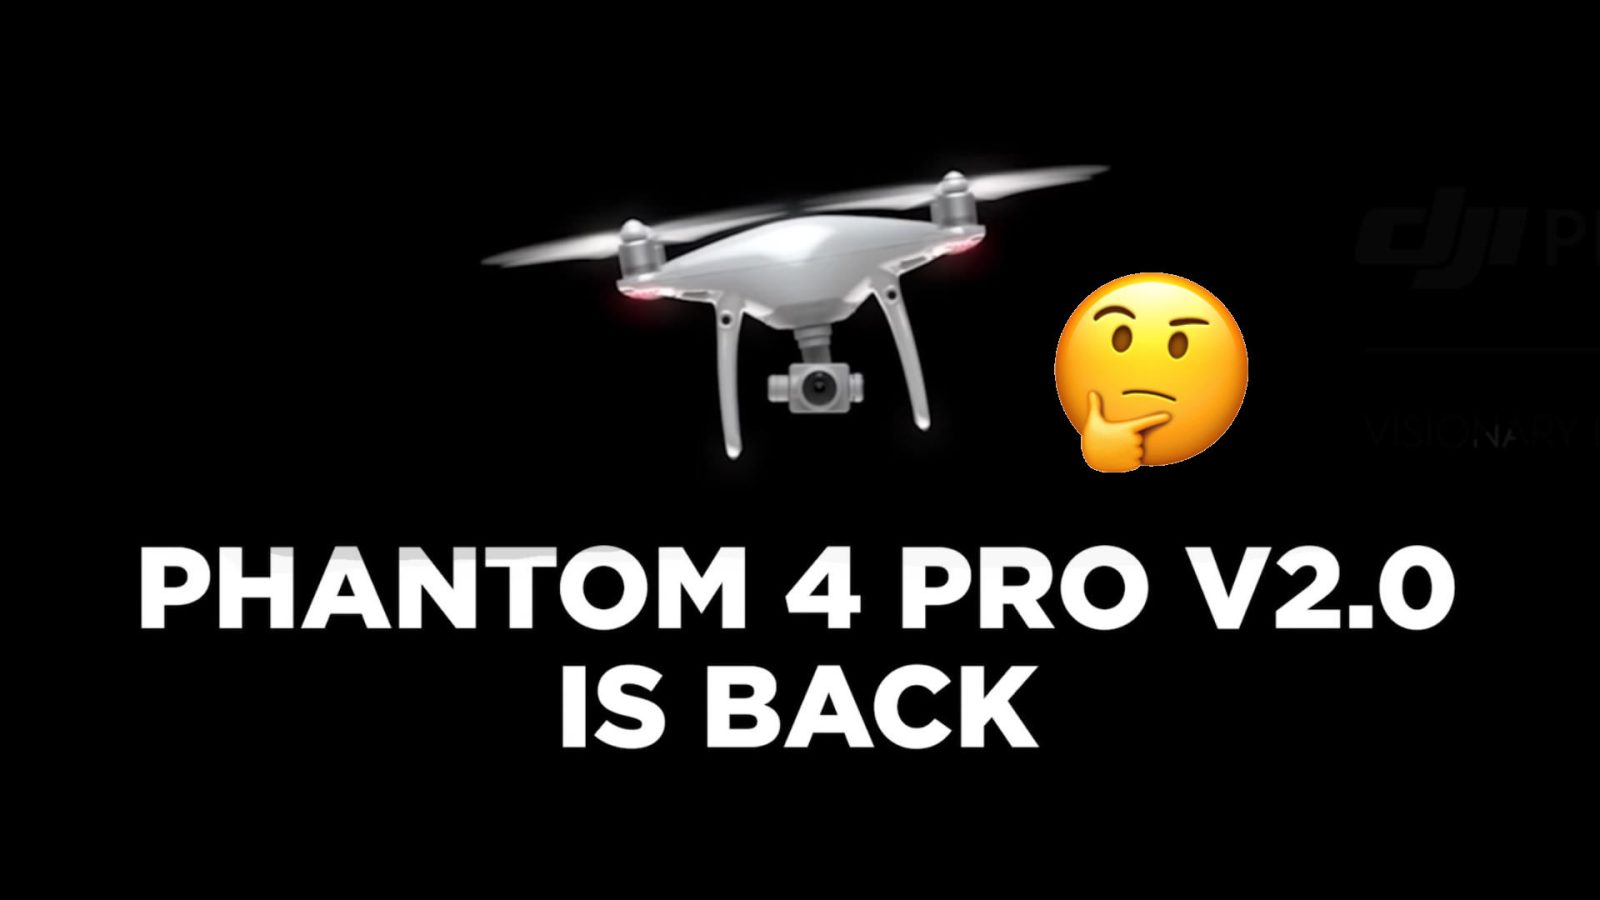 "DJI Phantom 4 Pro V2.0 is back" says Chinese drone maker...